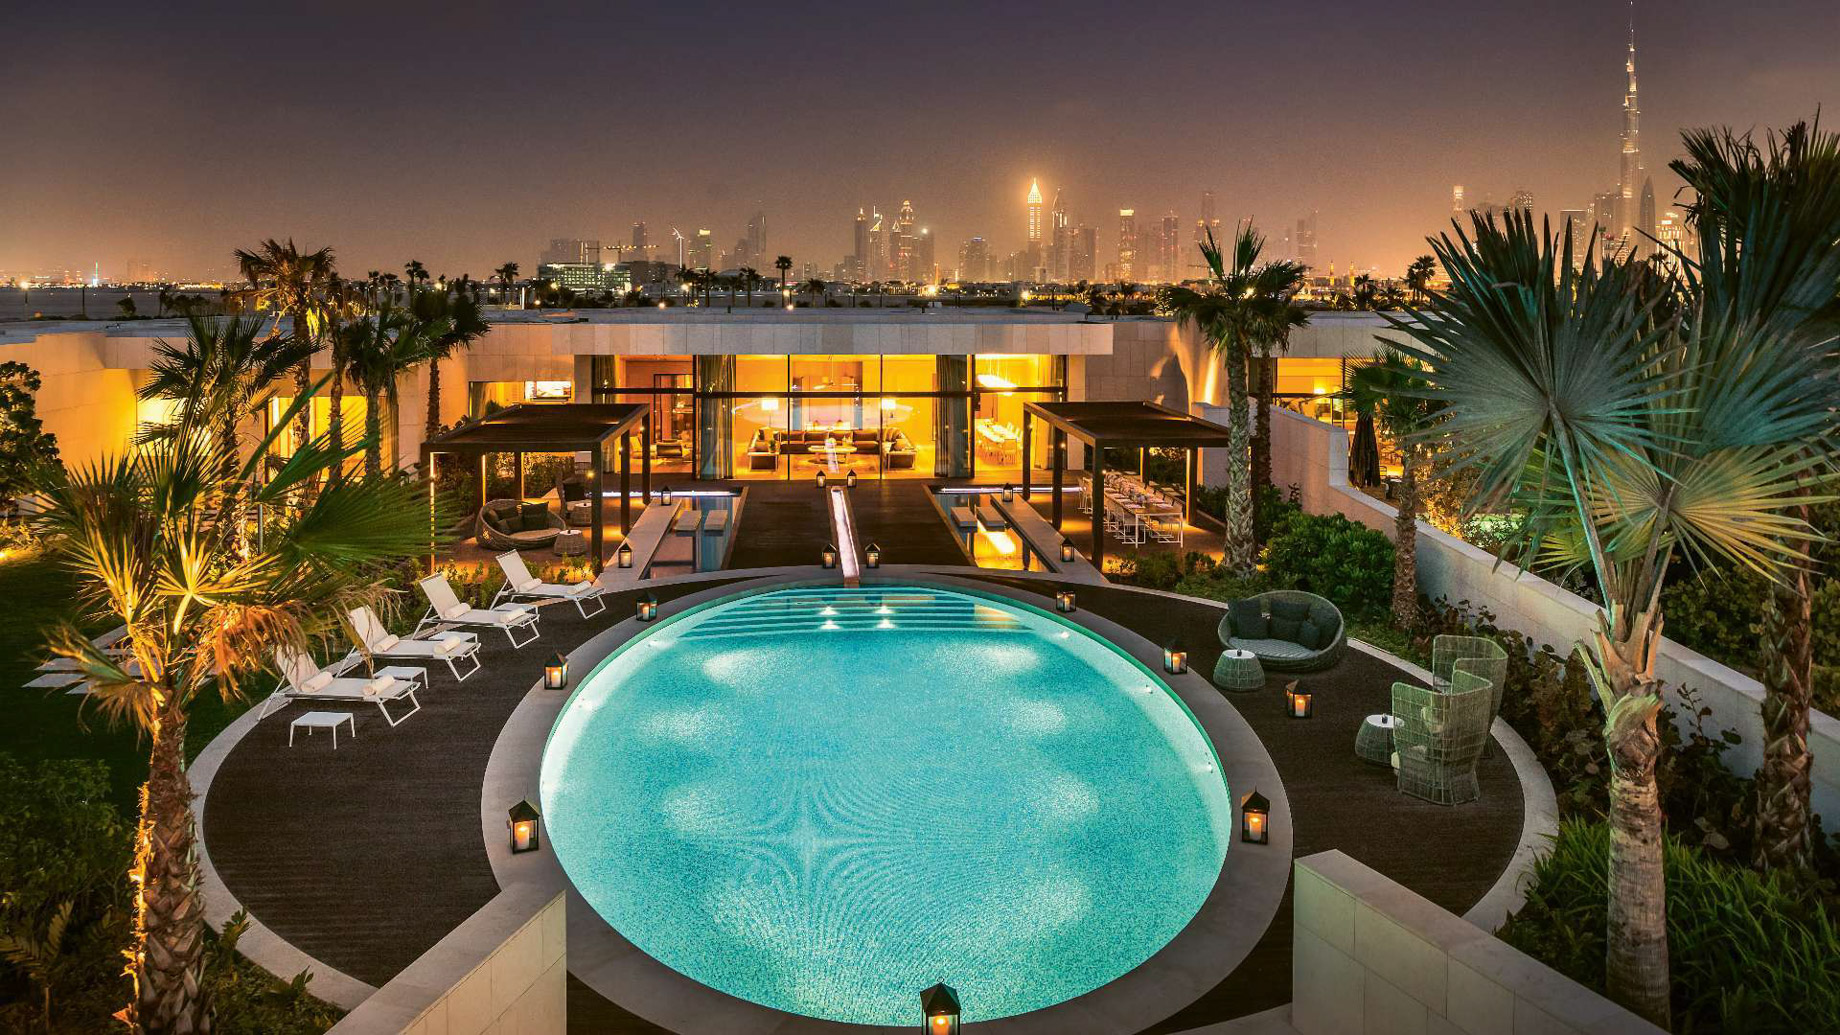 Bvlgari Resort Dubai – Jumeira Bay Island, Dubai, UAE – Bvlgari Villa Night Aerial City View